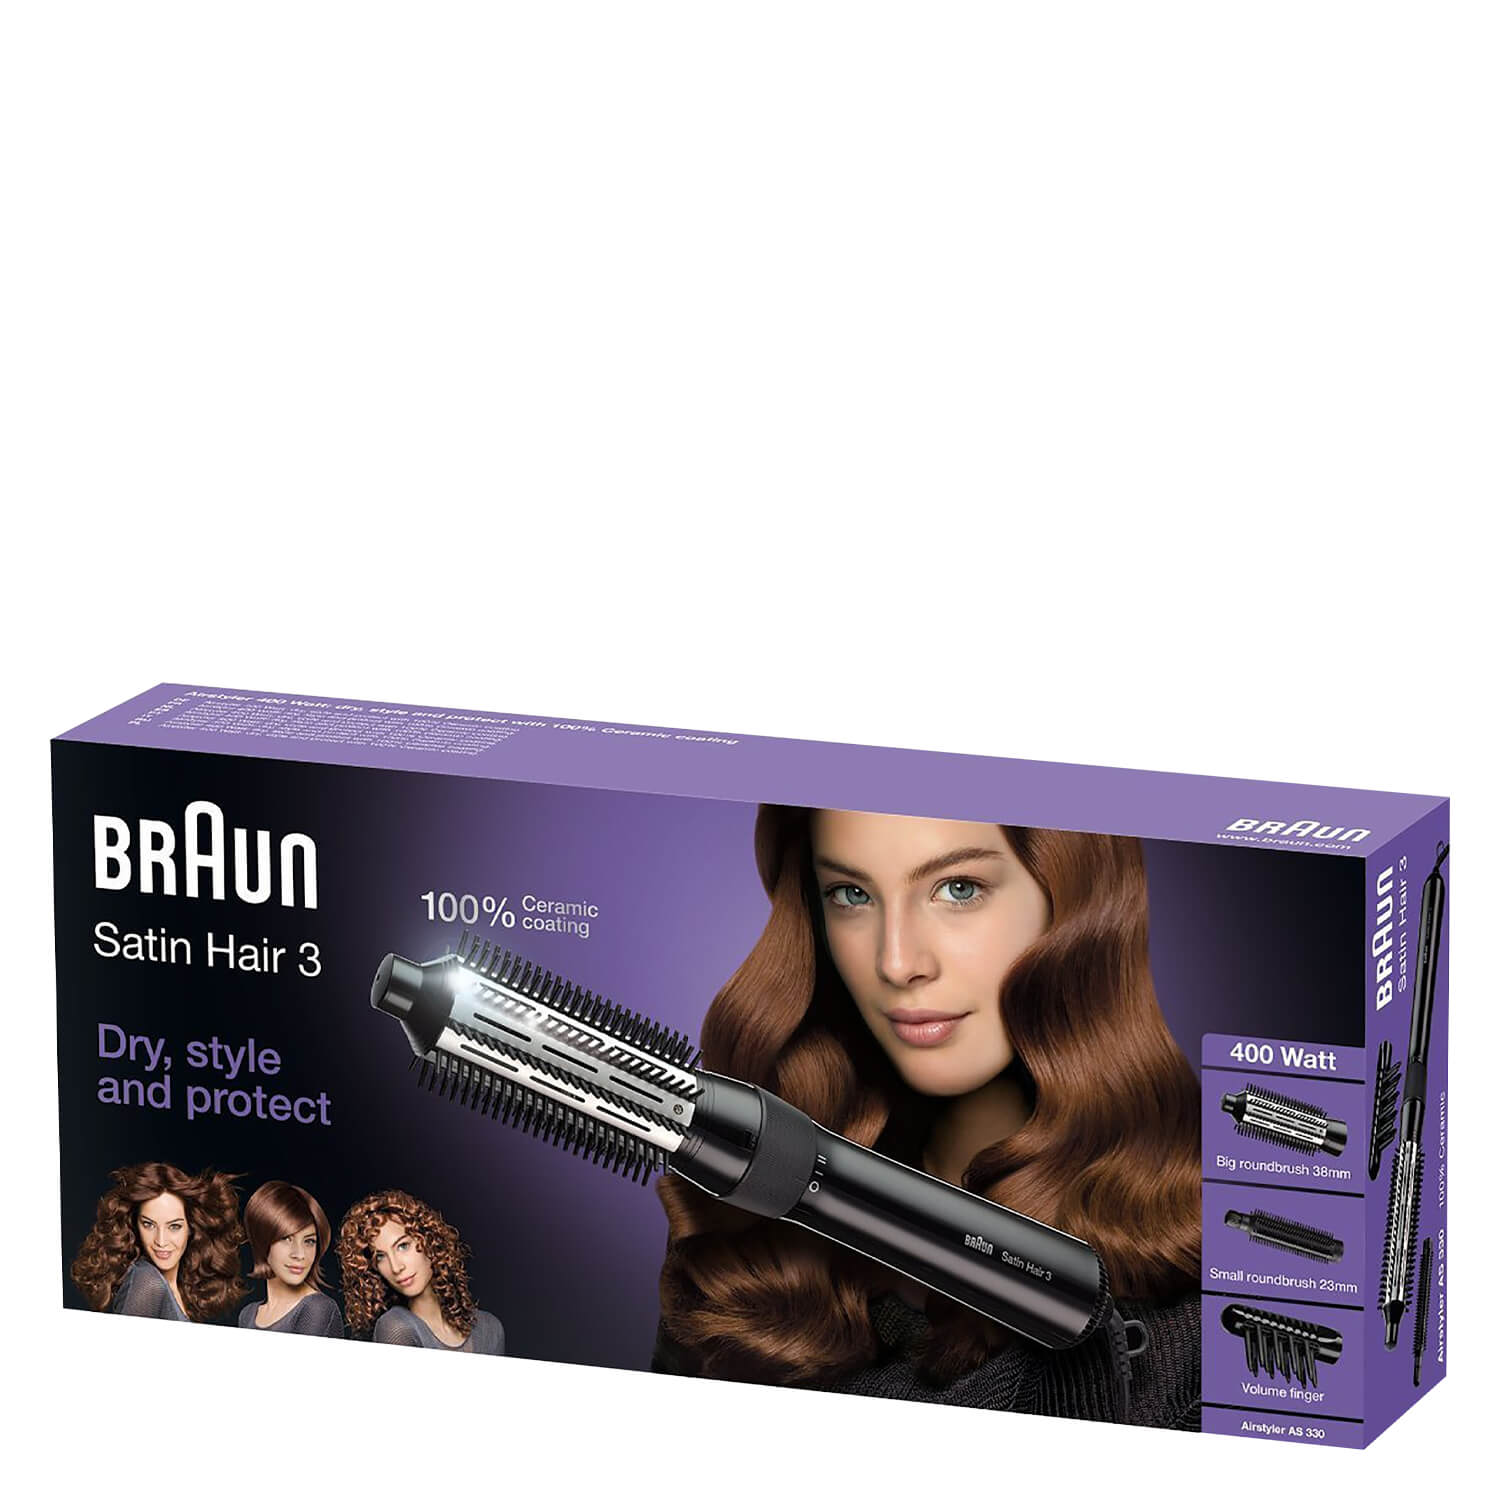 BRAUN - Satin Hair 3 Styler Air